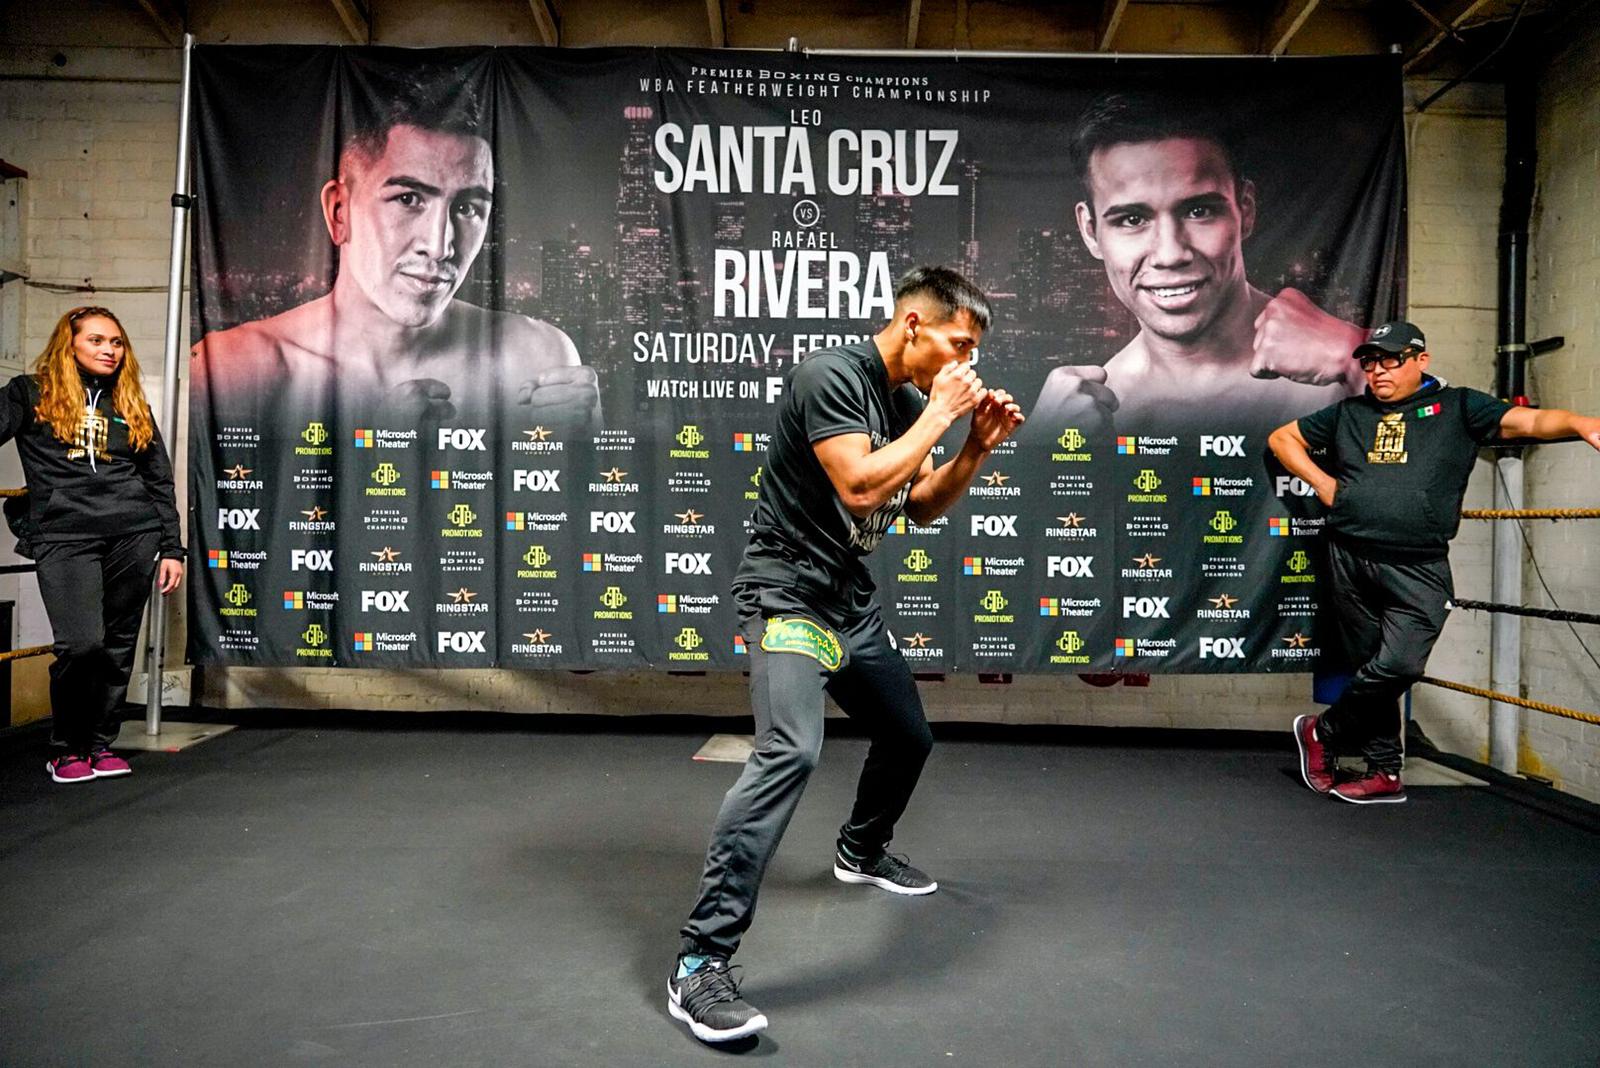 Rivera promises to dethrone WBA champ Santa Cruz